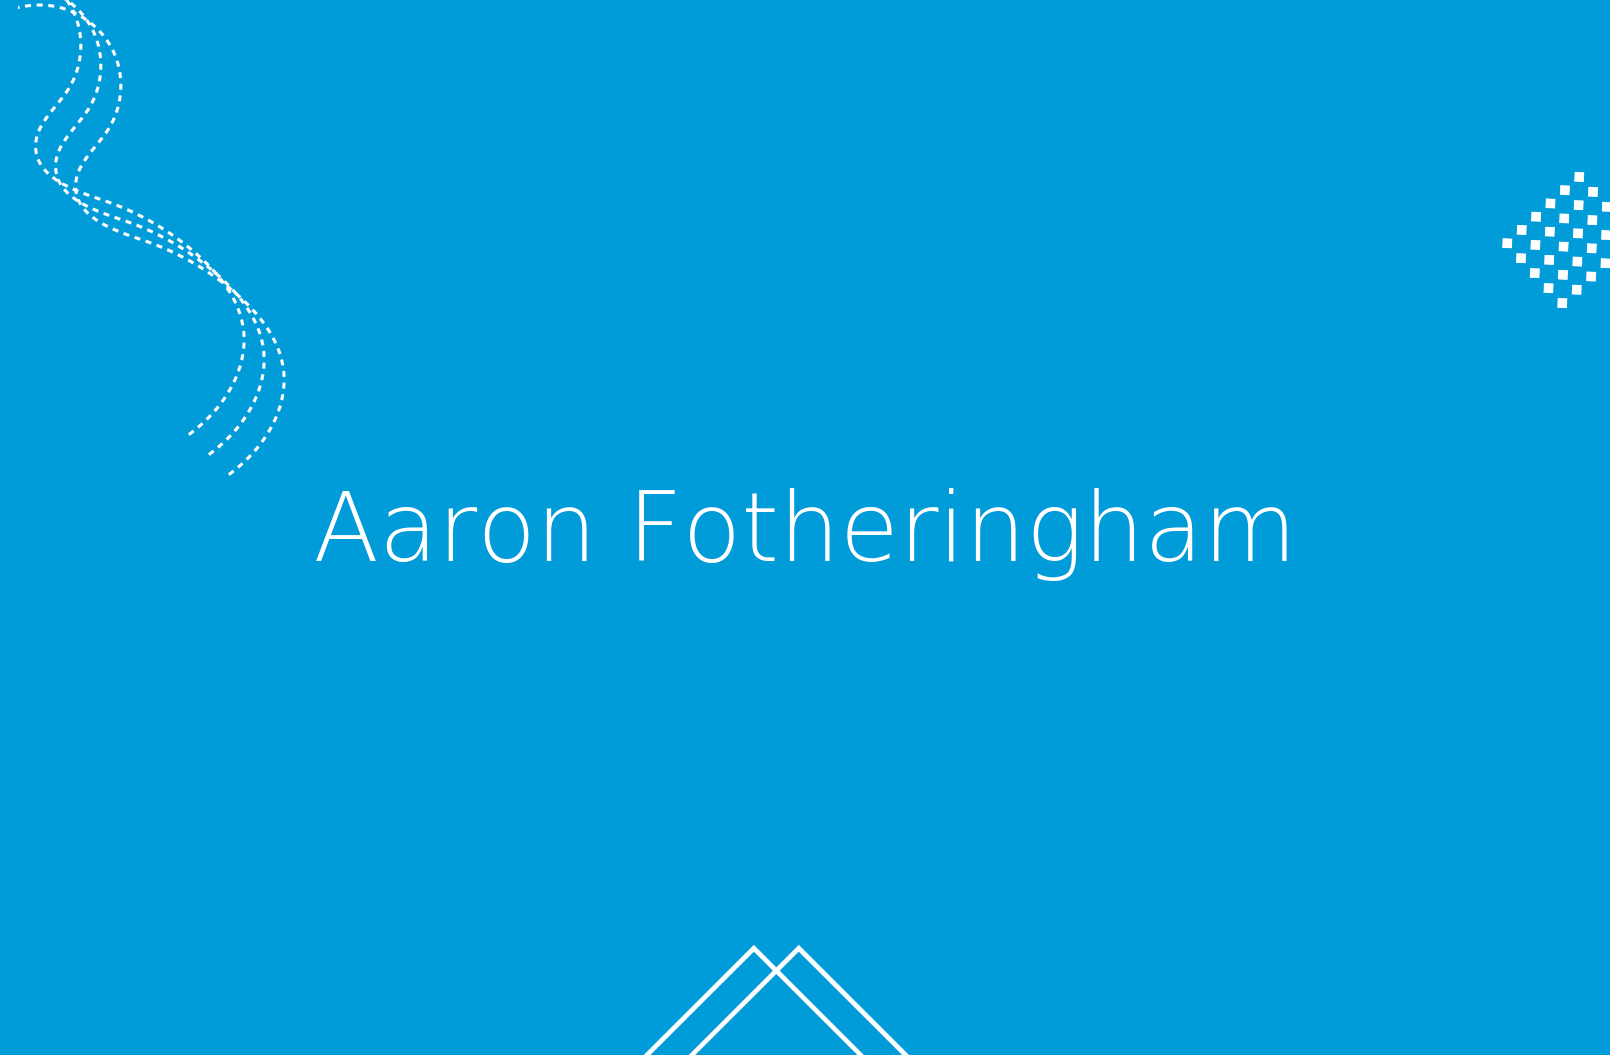 Biografía de Aaron Fotheringham